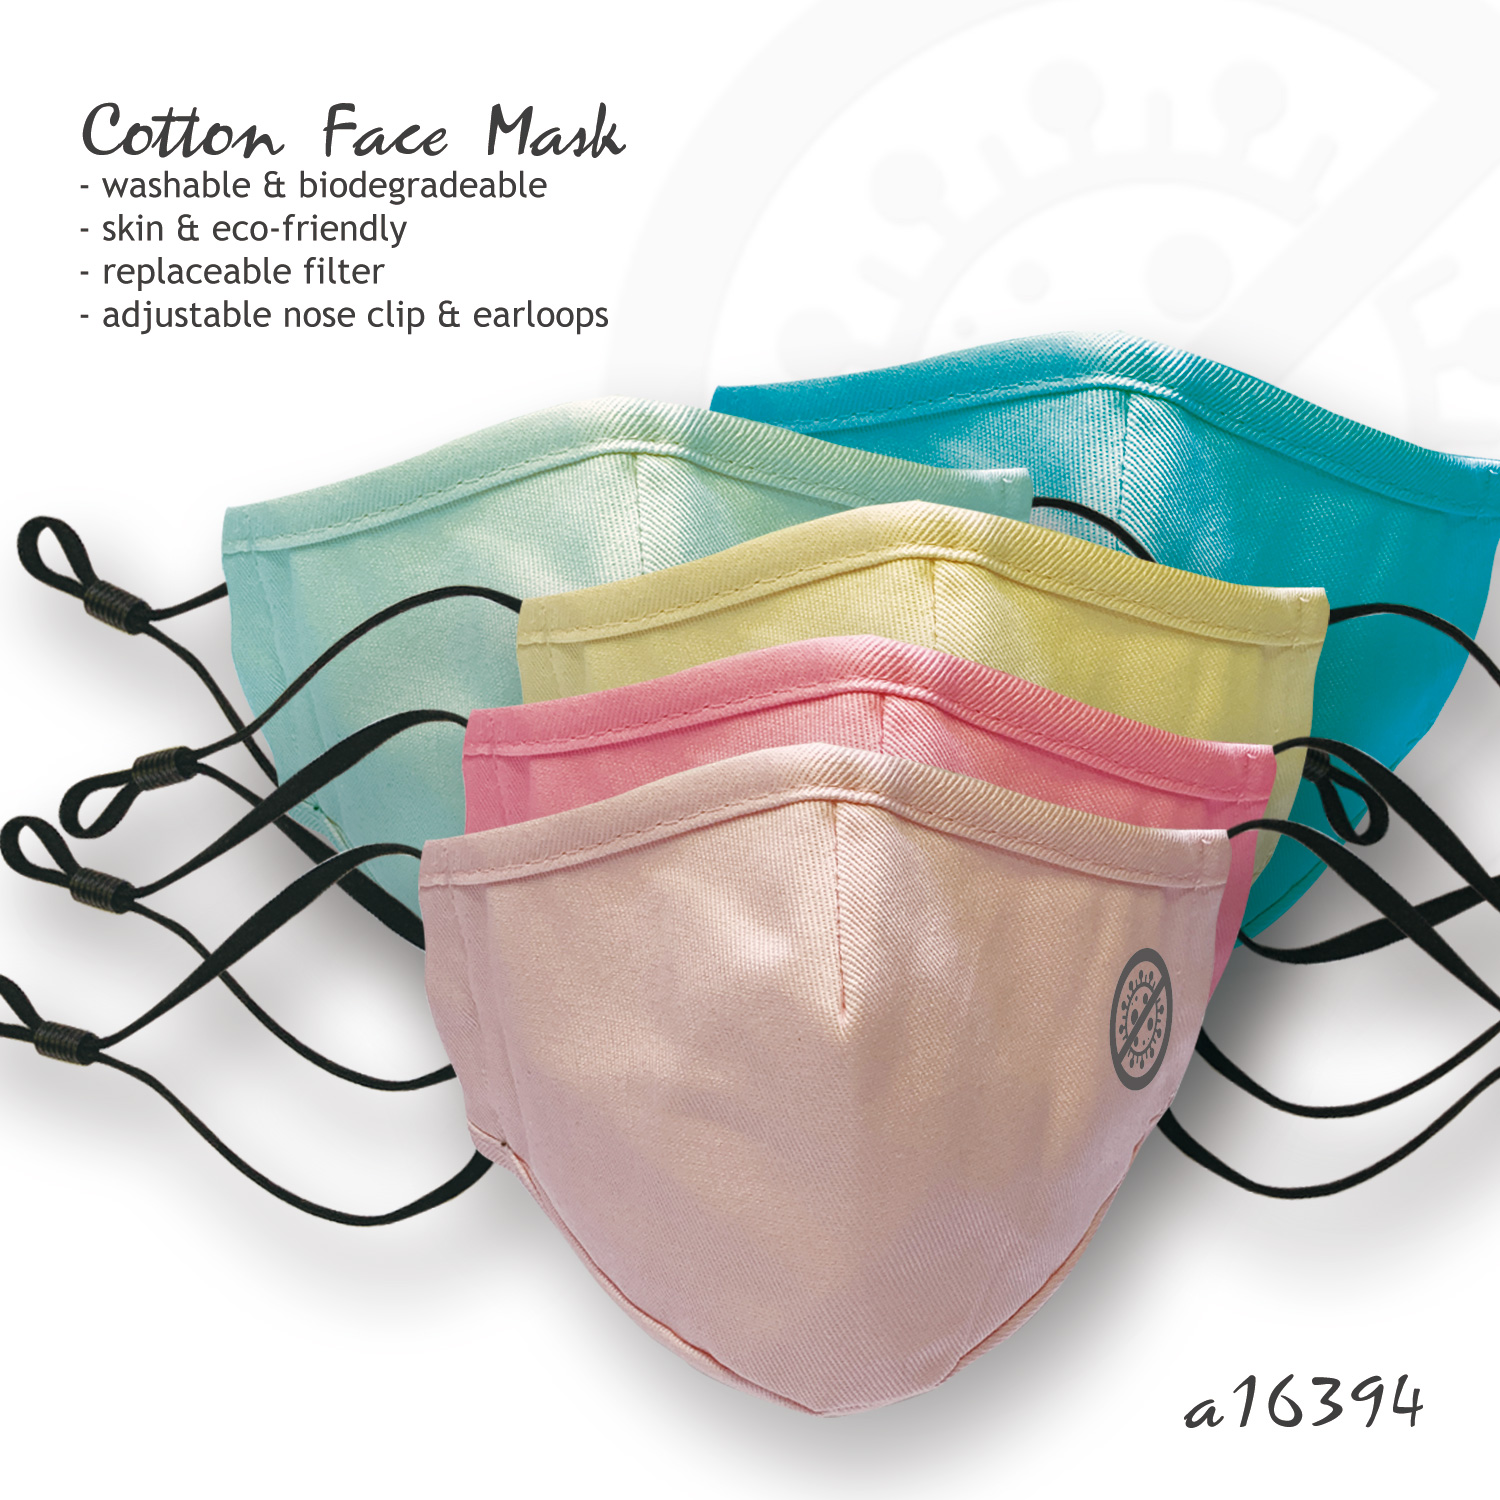 Cotton Face Mask with Anti-Virus Pattern